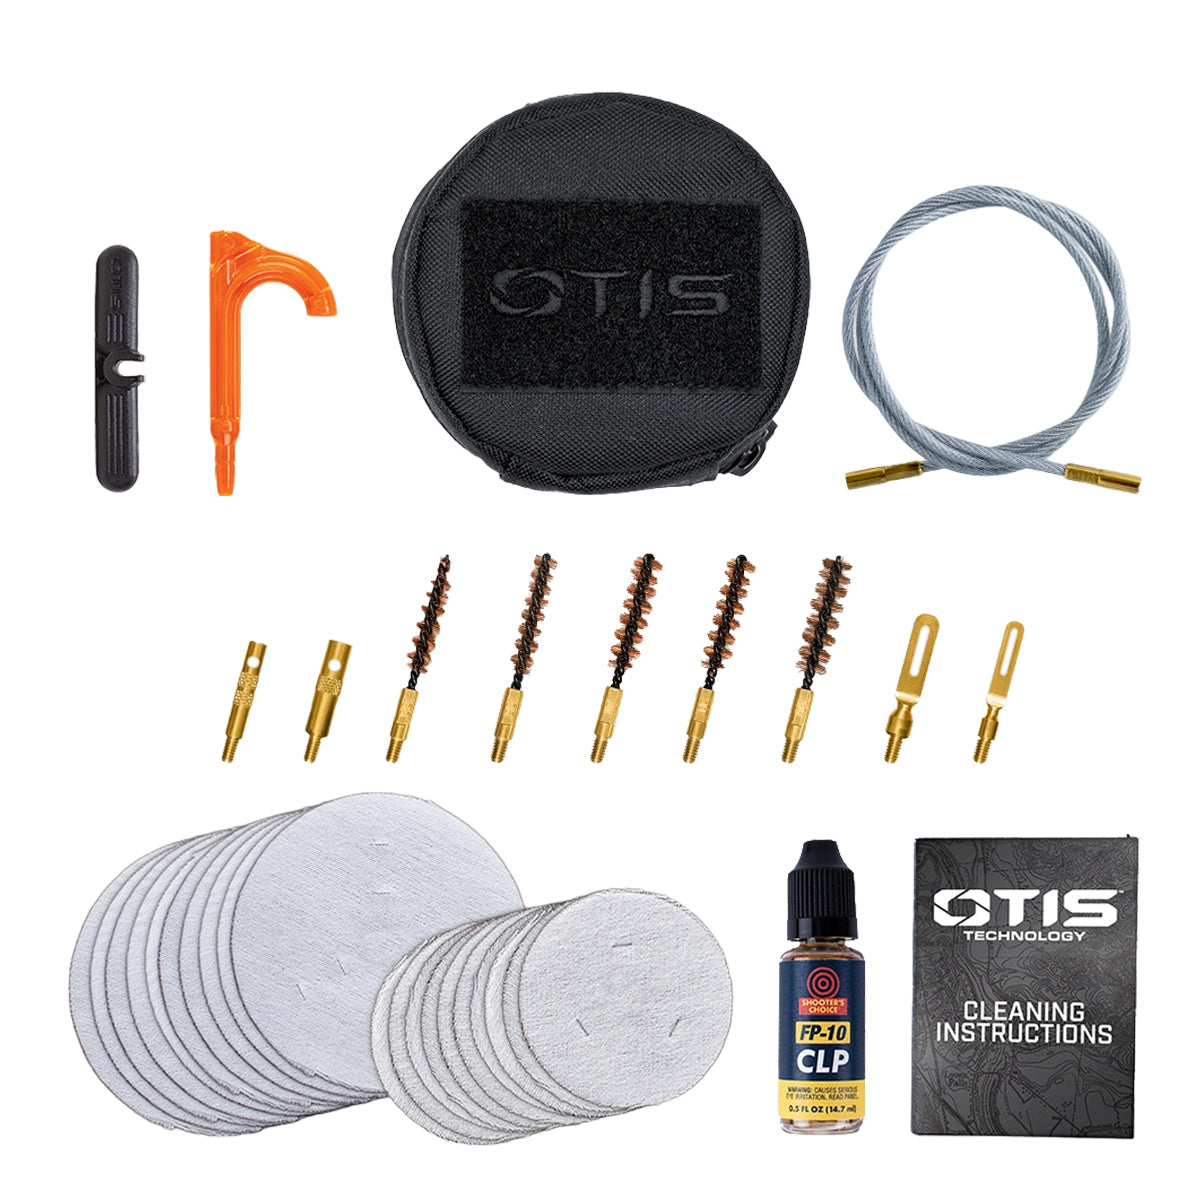 Otis Technology Rifle Cleaning Kit